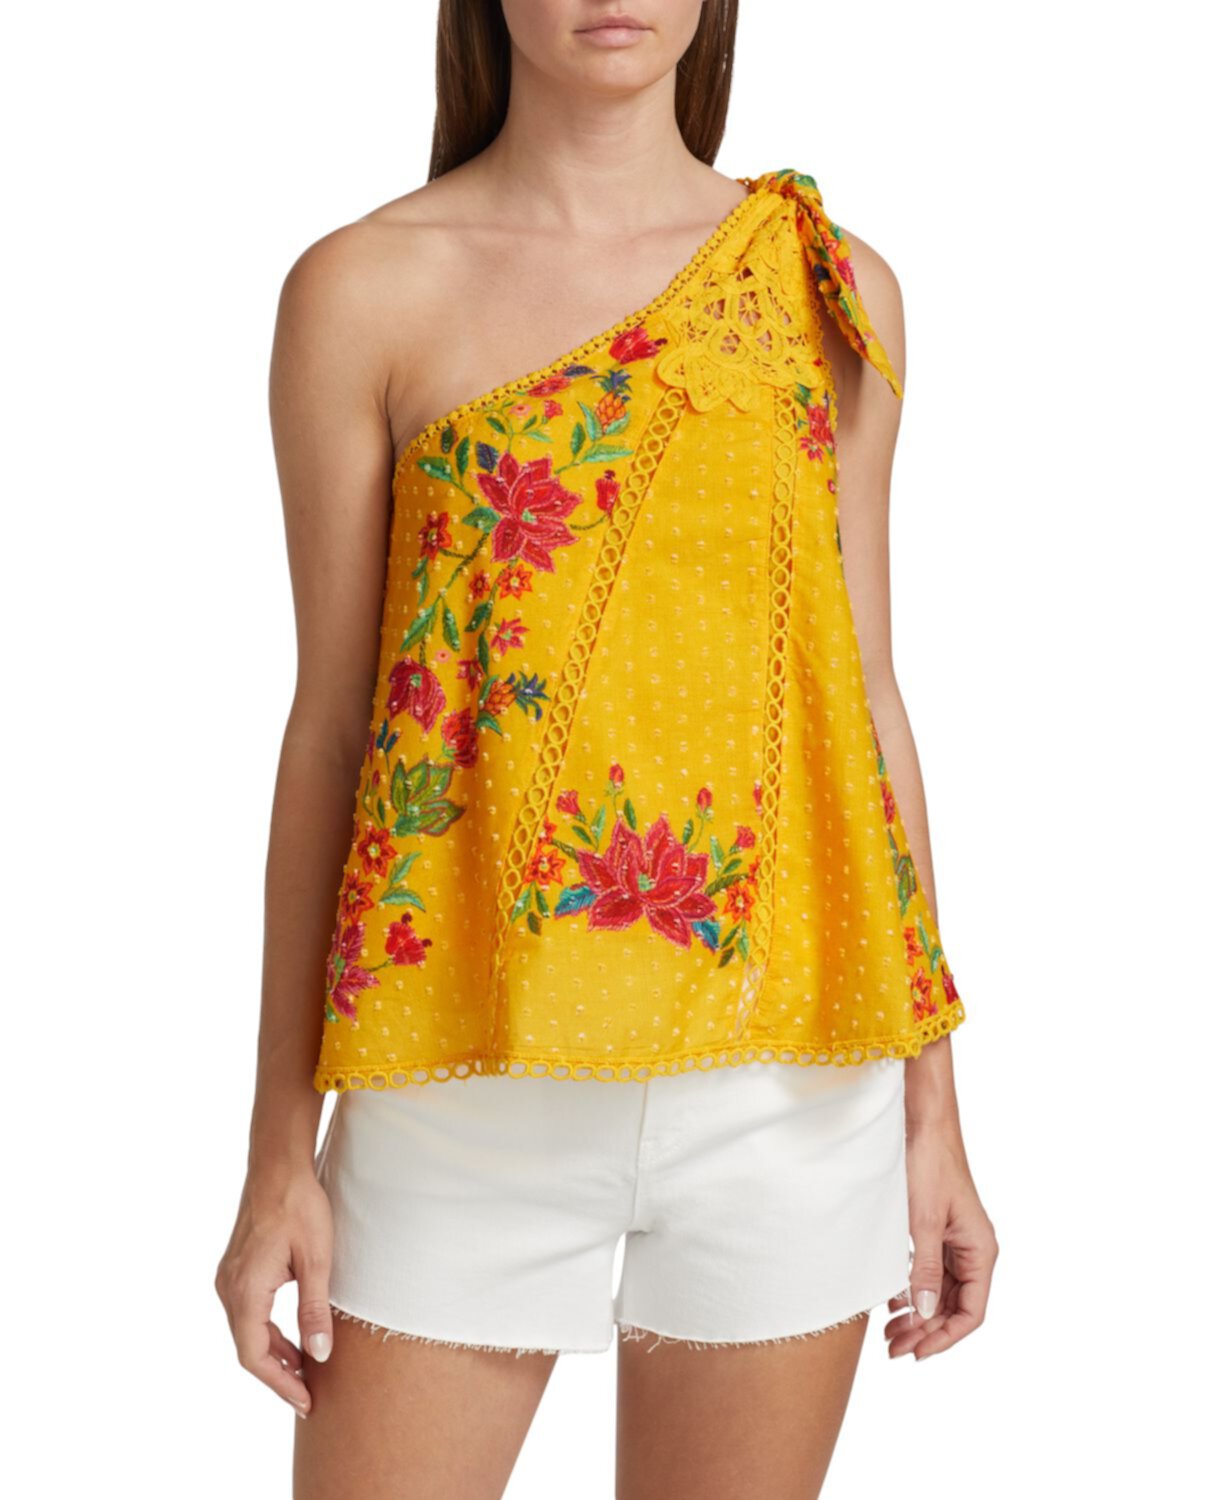 Блузка на одно плечо с вышивкой Flower Dream Farm Rio